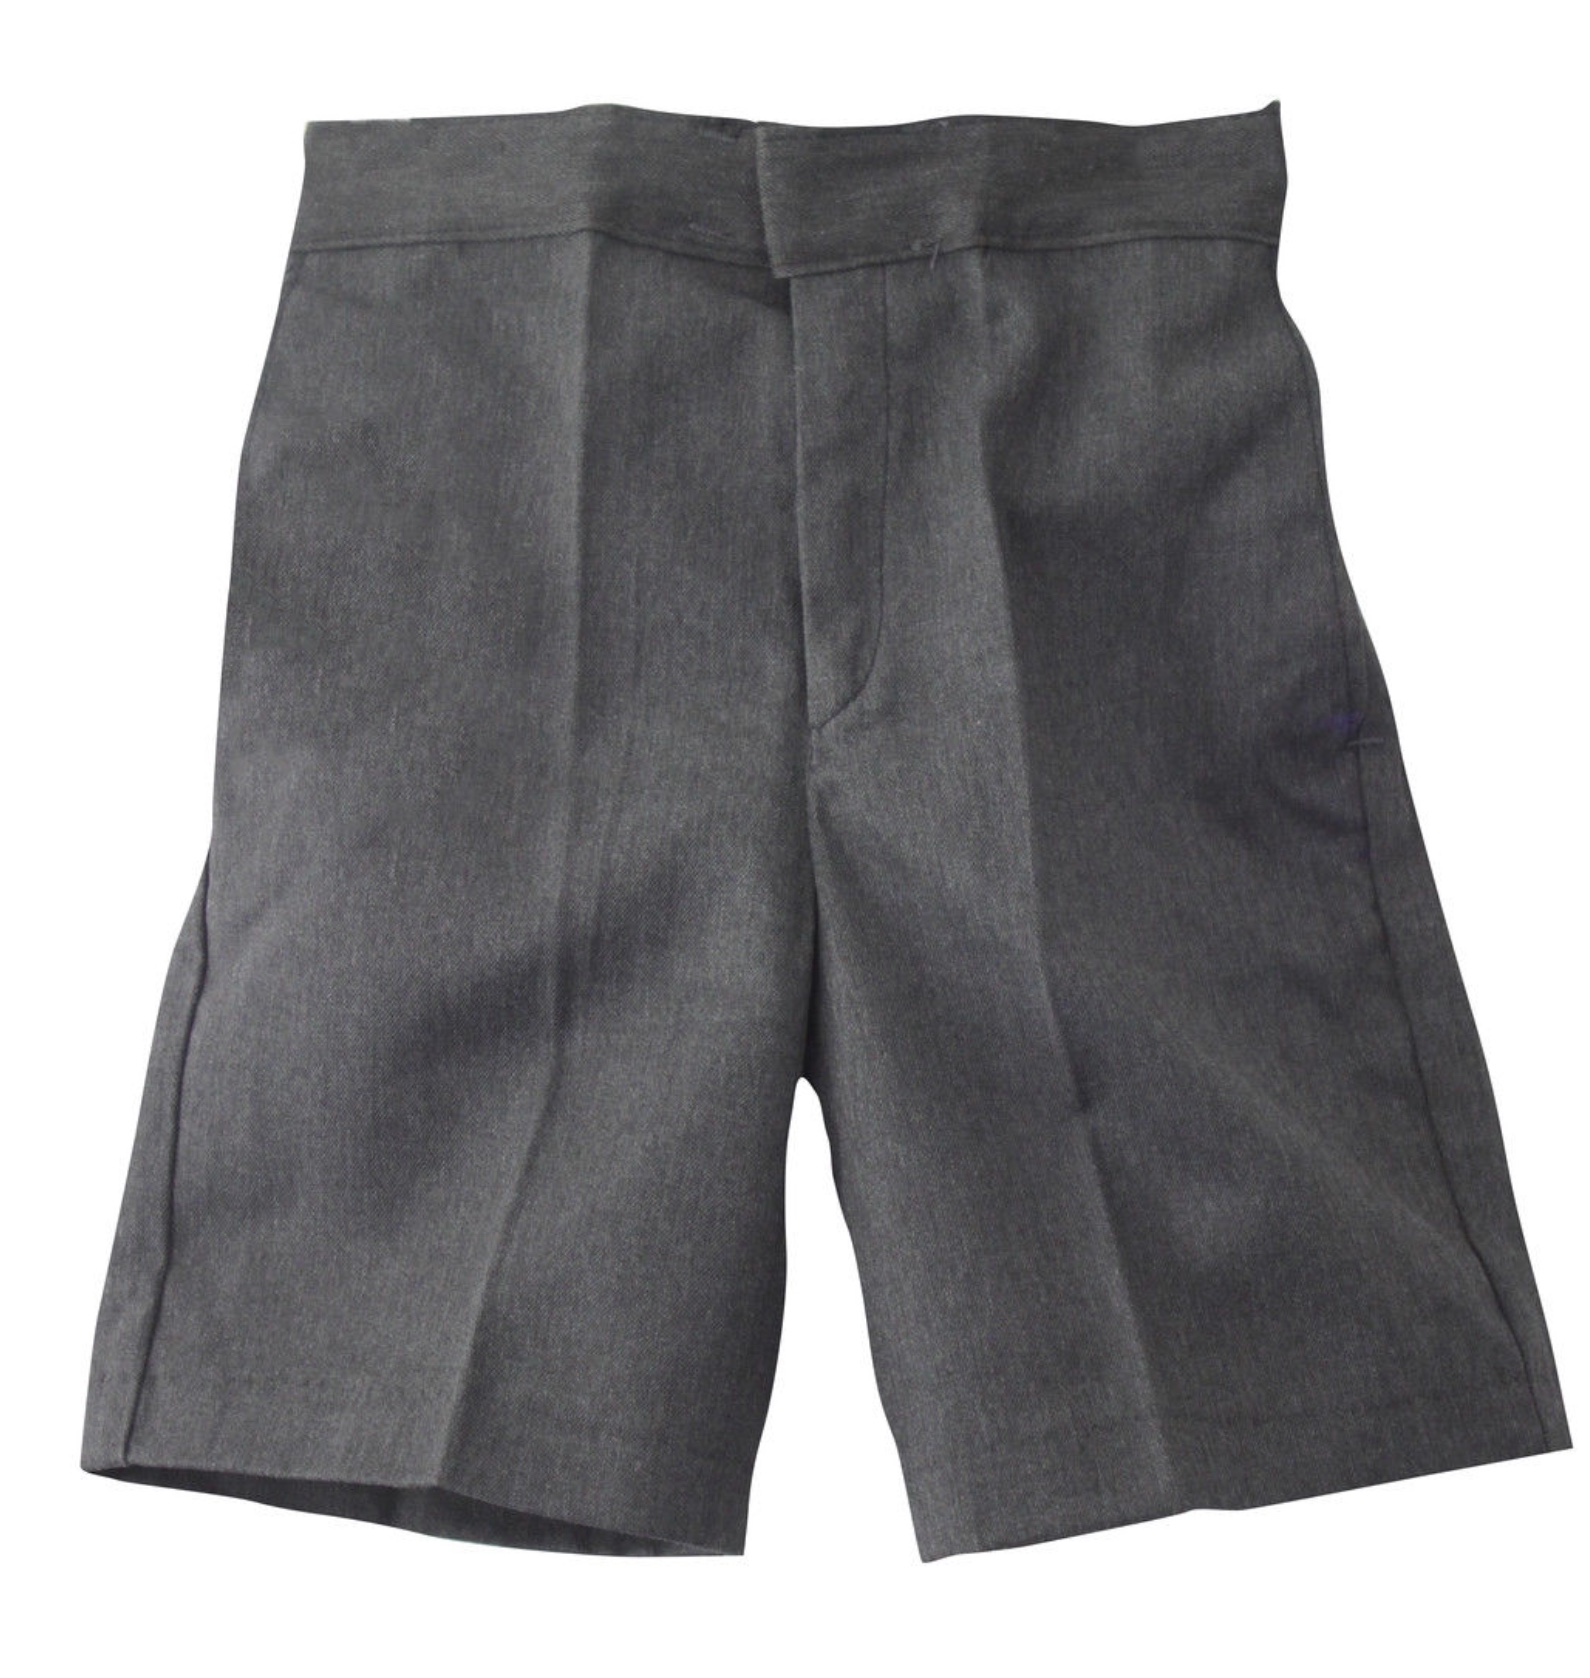 Boys' Dark Grey Shorts, Flat Front, Adjustable Waist, Zip Fly, Side and Back Pockets 7-8 Y